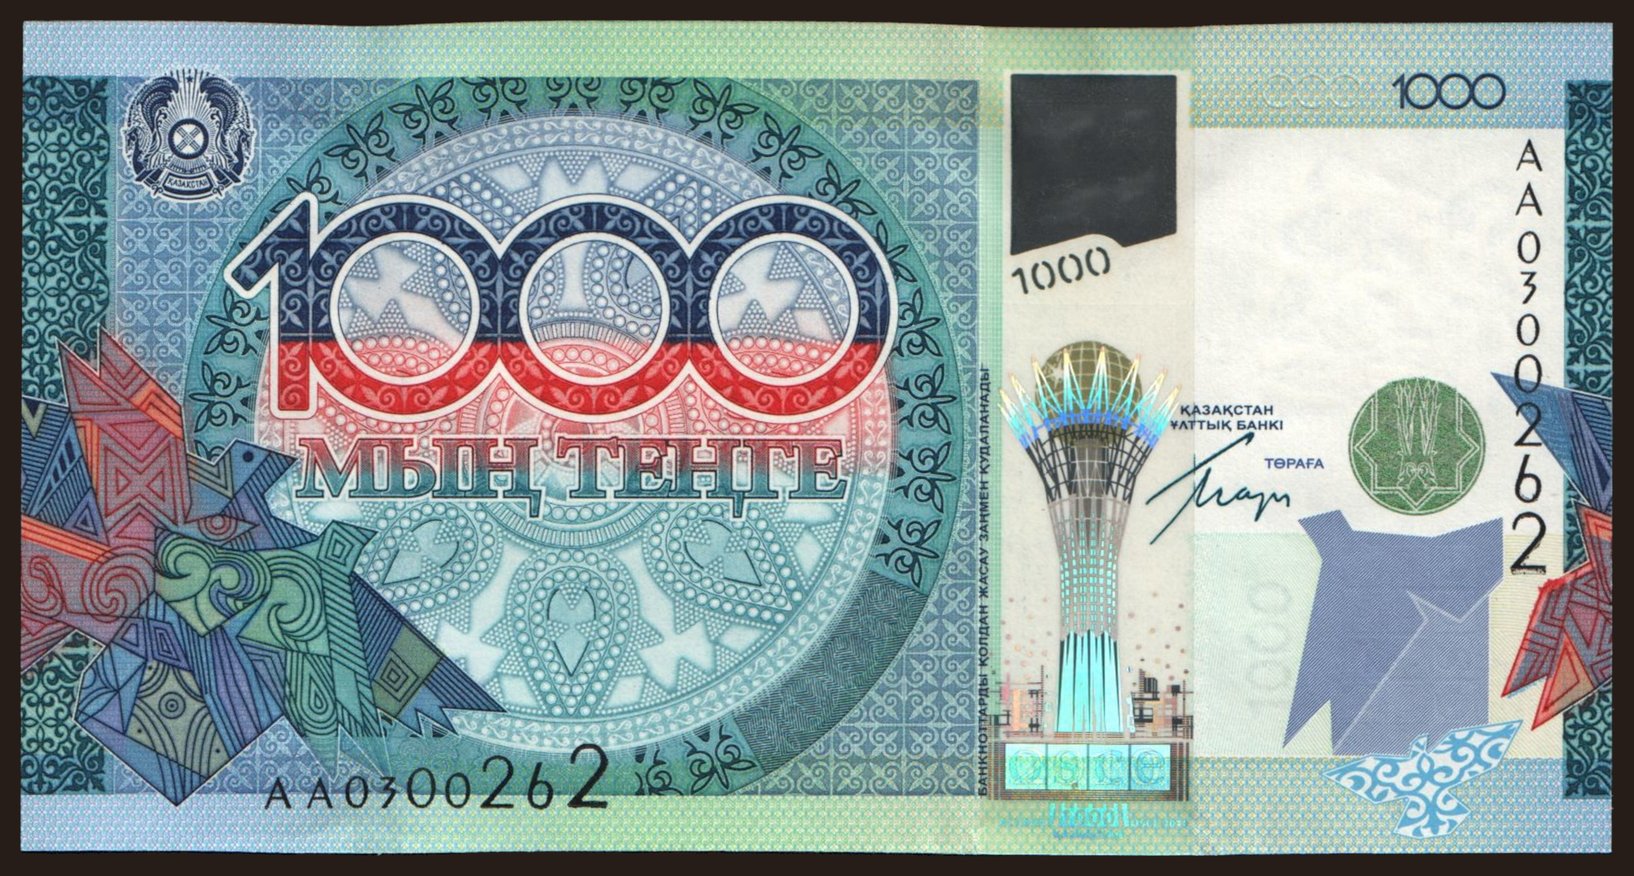 1000 tenge, 2010